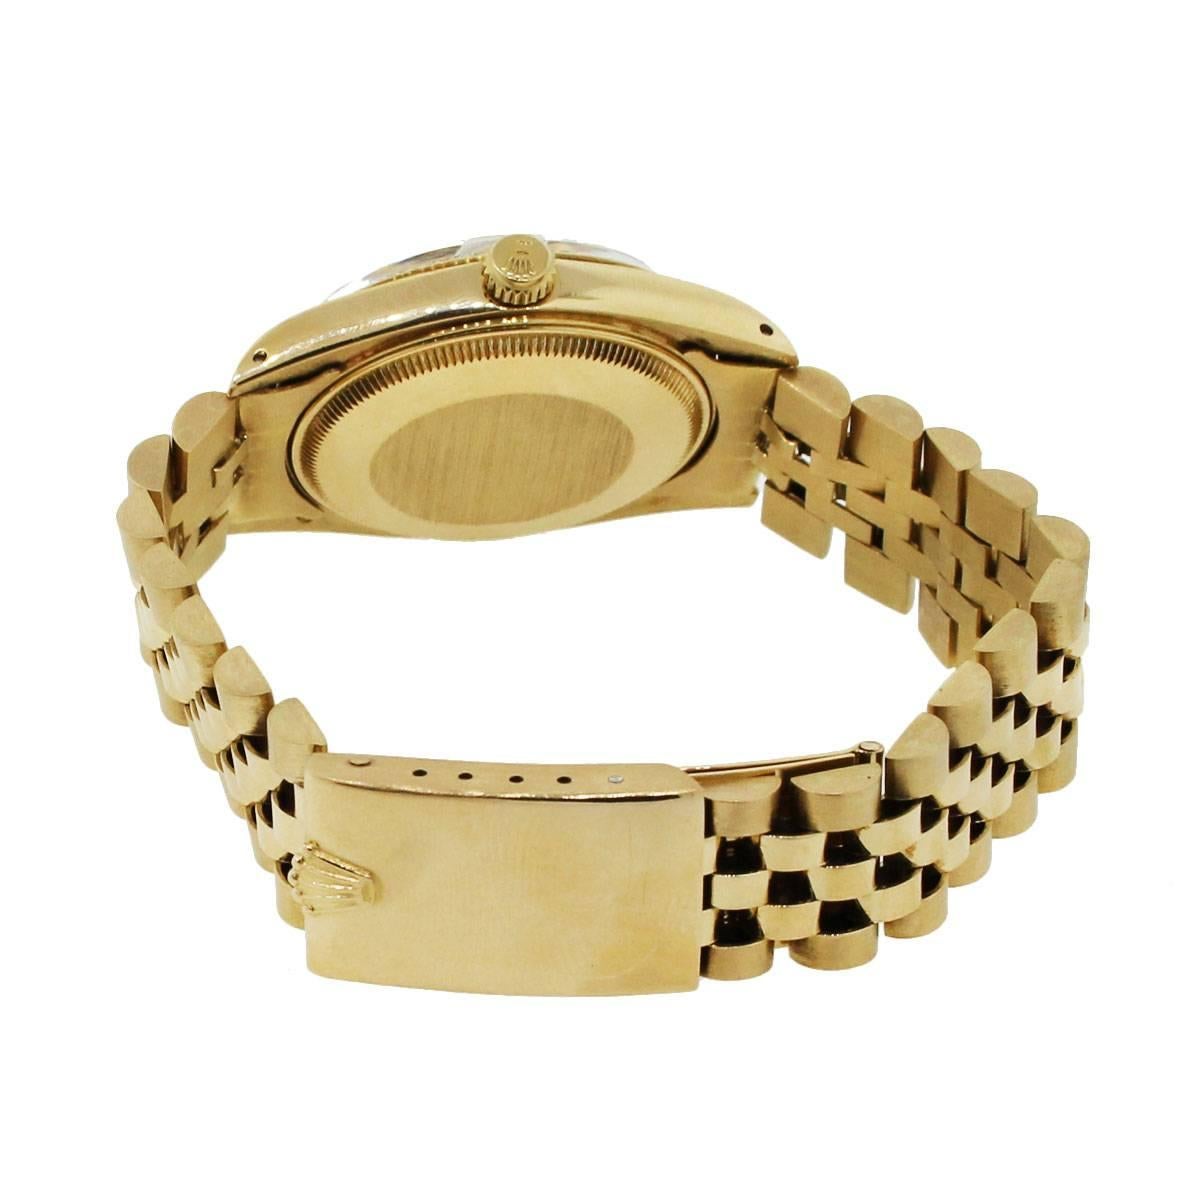 Rolex Date Champagne Dial Automatic Wristwatch Ref 1503 1